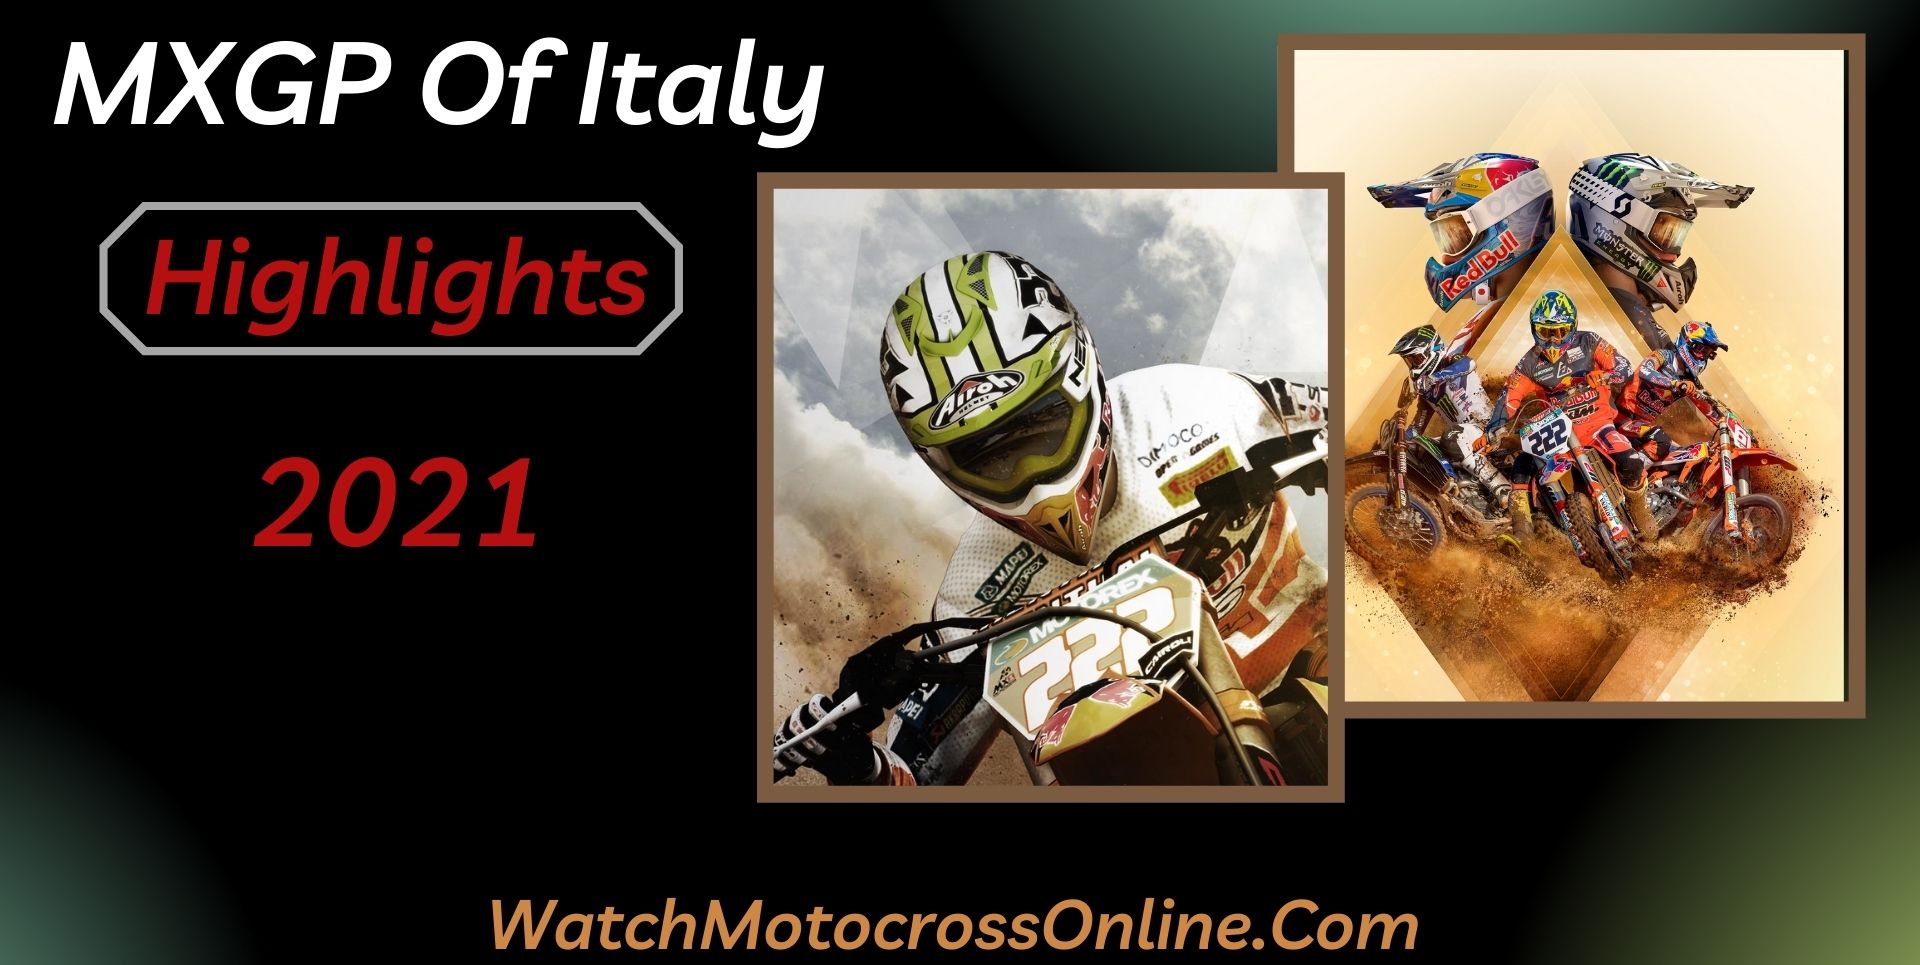 MXGP Of Italy Highlights 2021